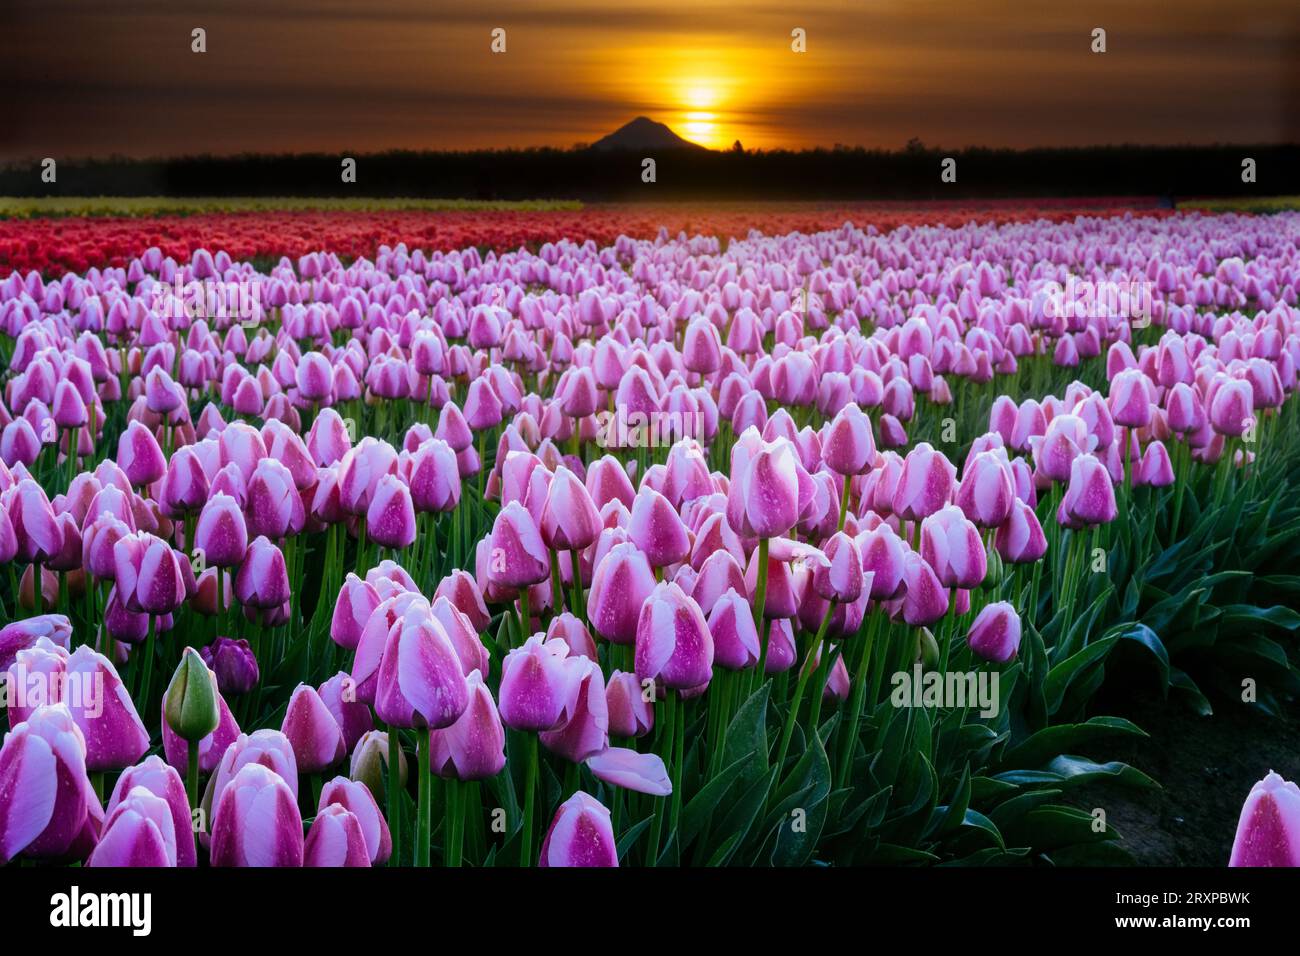 Field of purple tulips at sunset Stock Photo